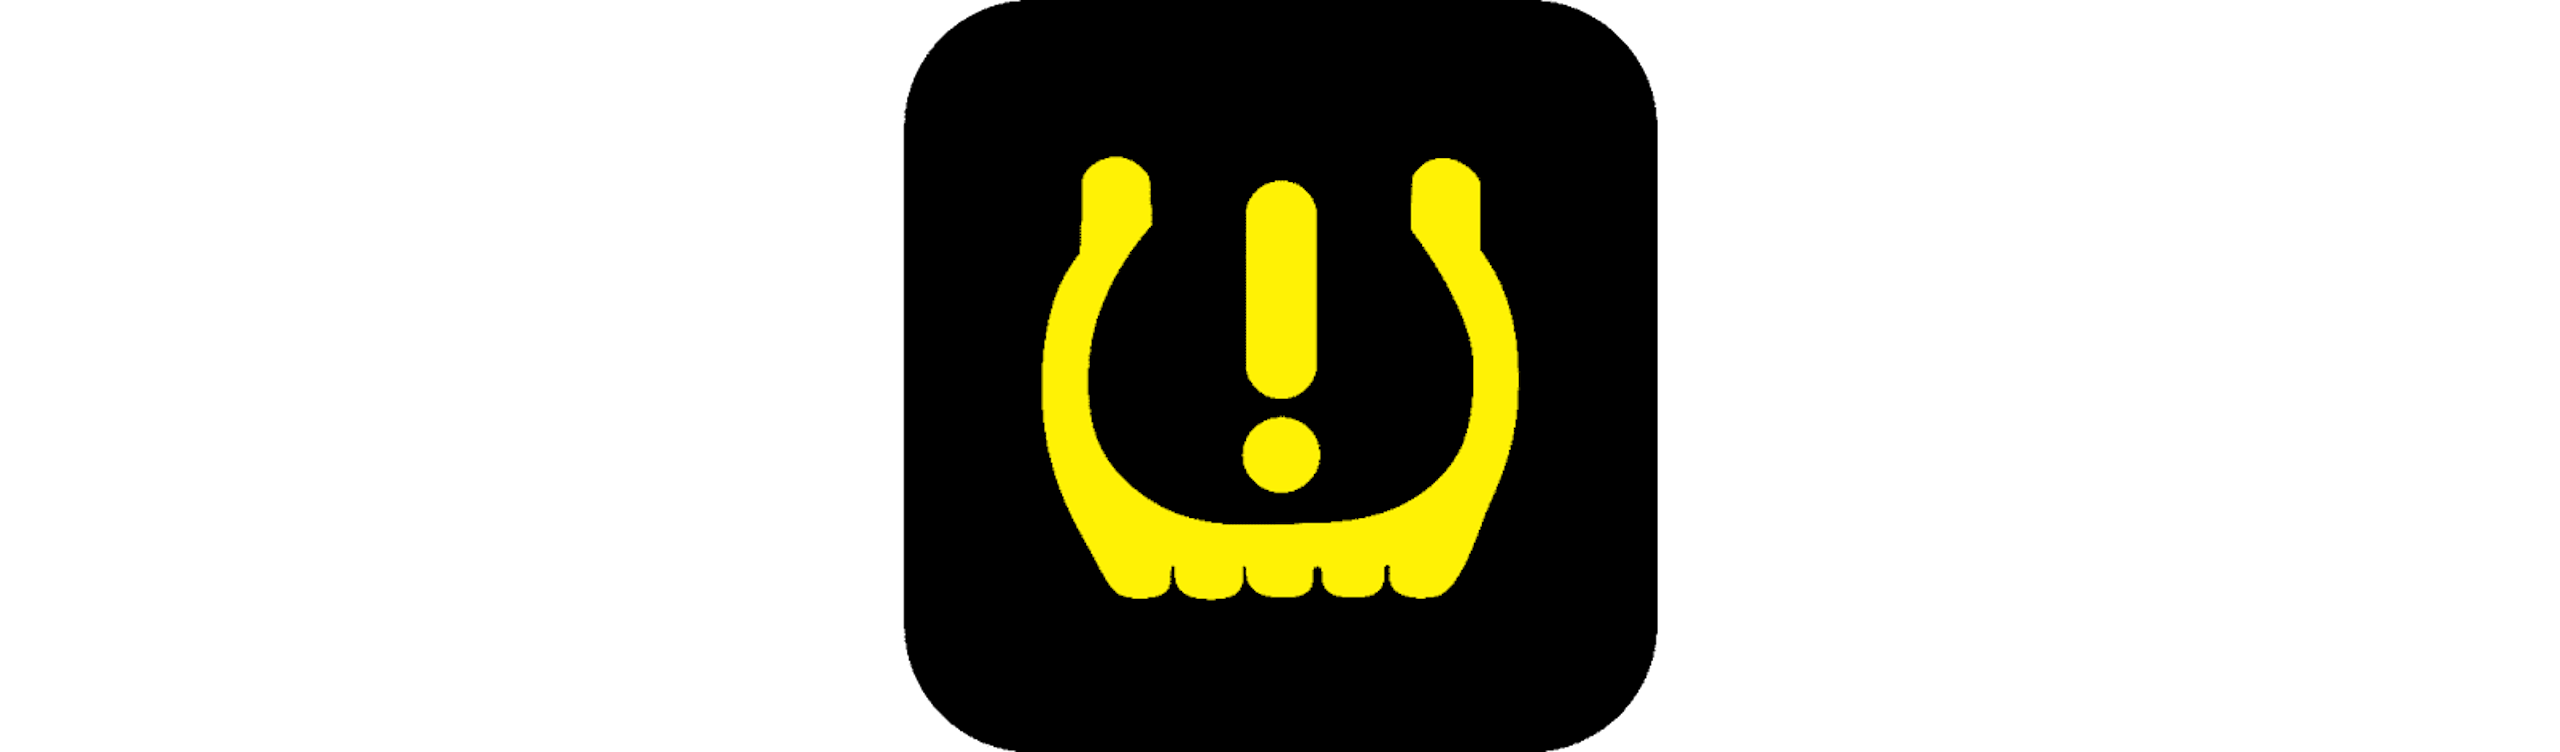 tire pressure indicator light on a black background